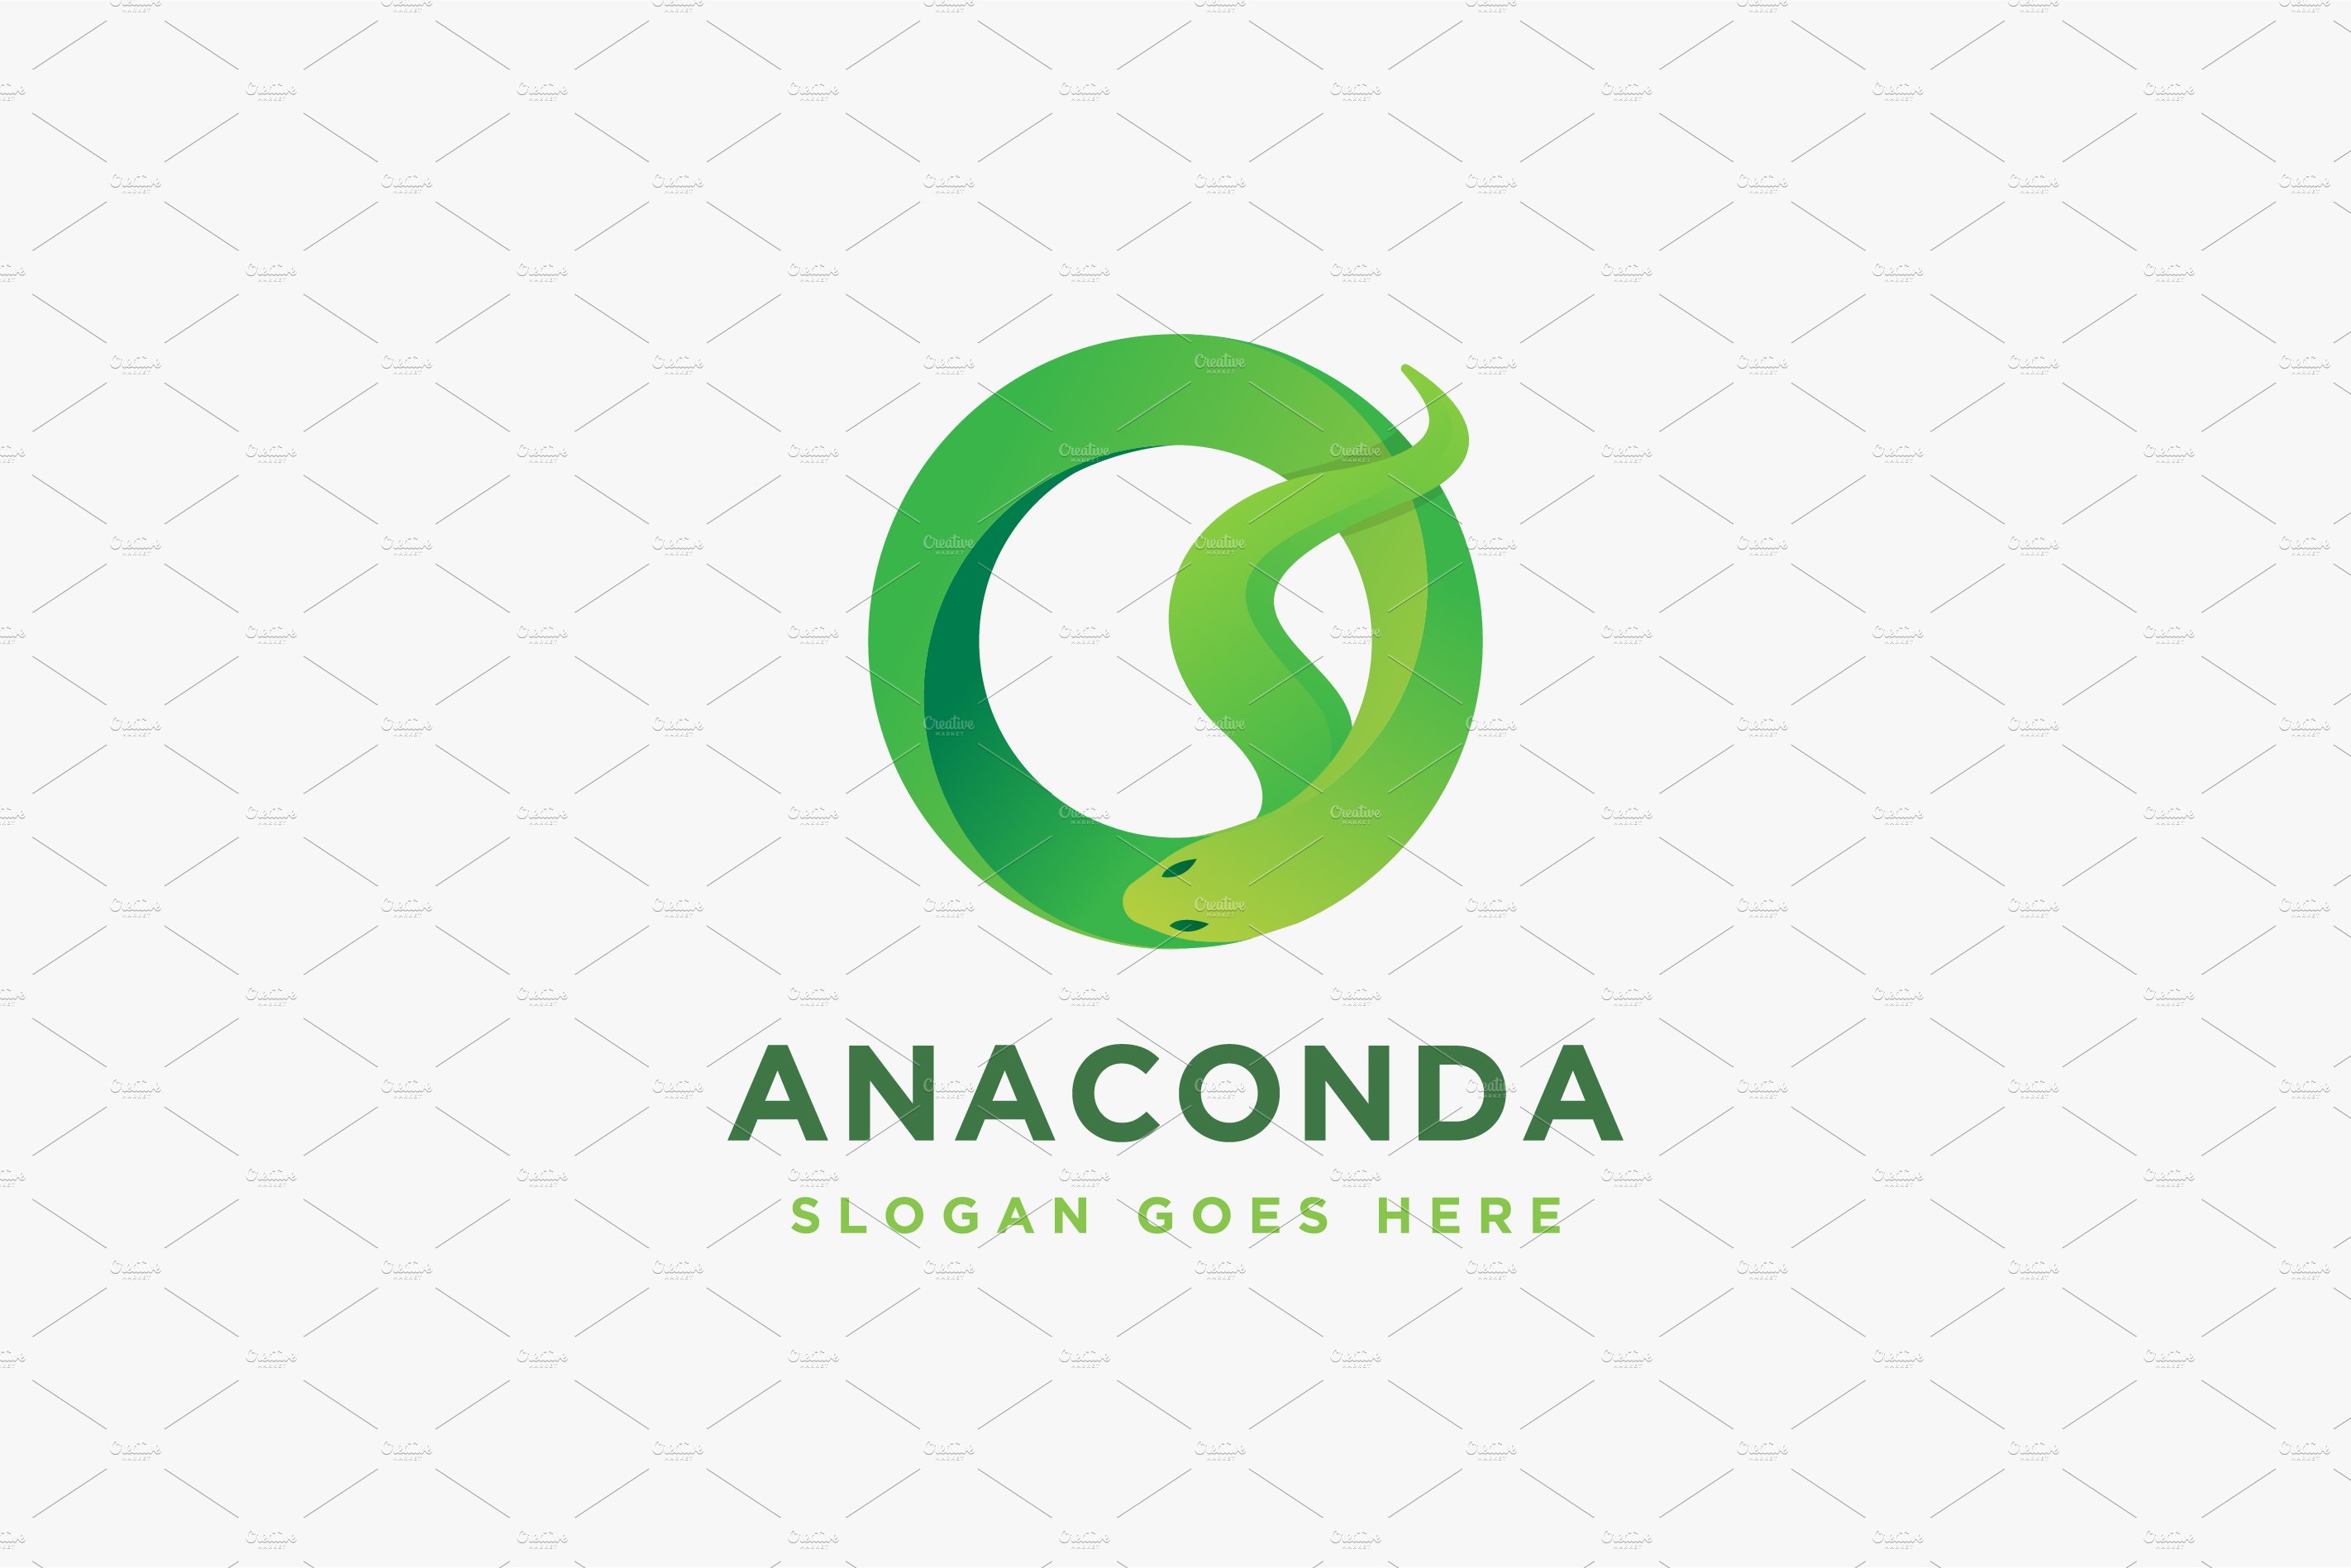 Abstract Anaconda snake logo cover image.